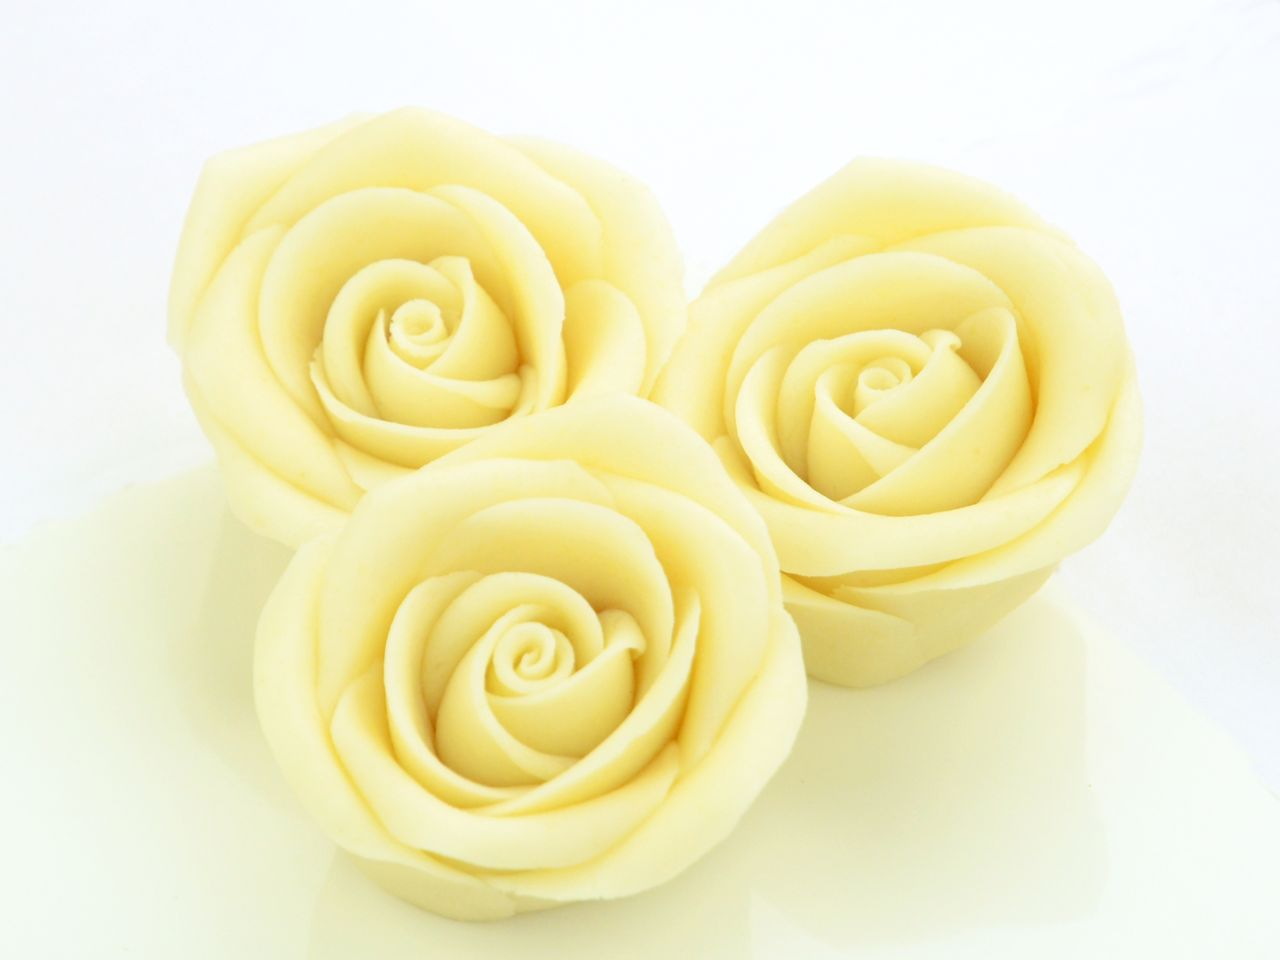 Marzipan-Rosen groß weiß 16 Stück